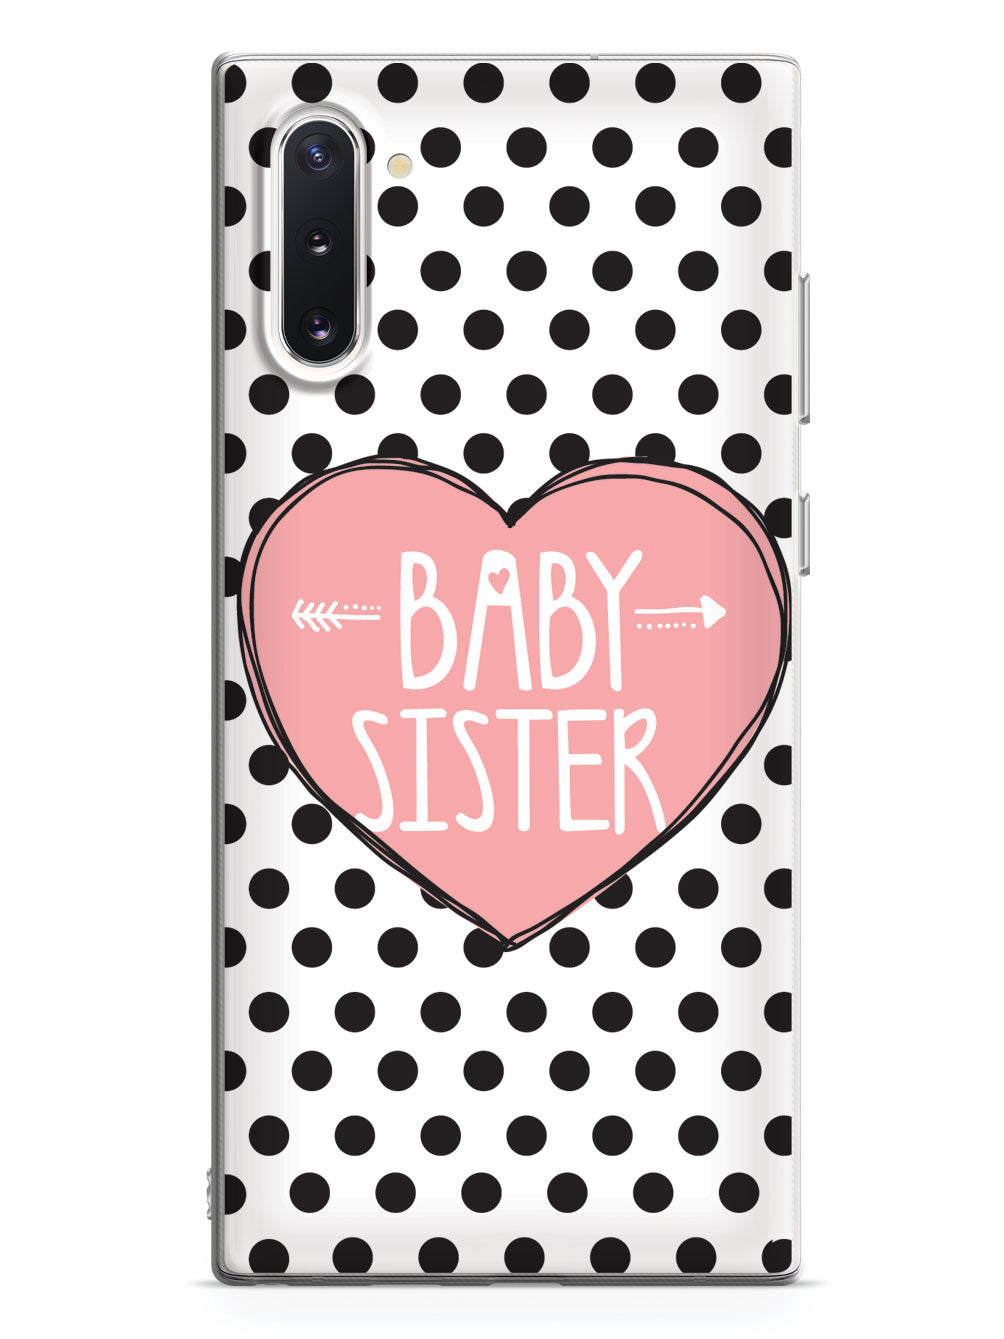 Sisterly Love - Baby Sister - Polka Dots Case